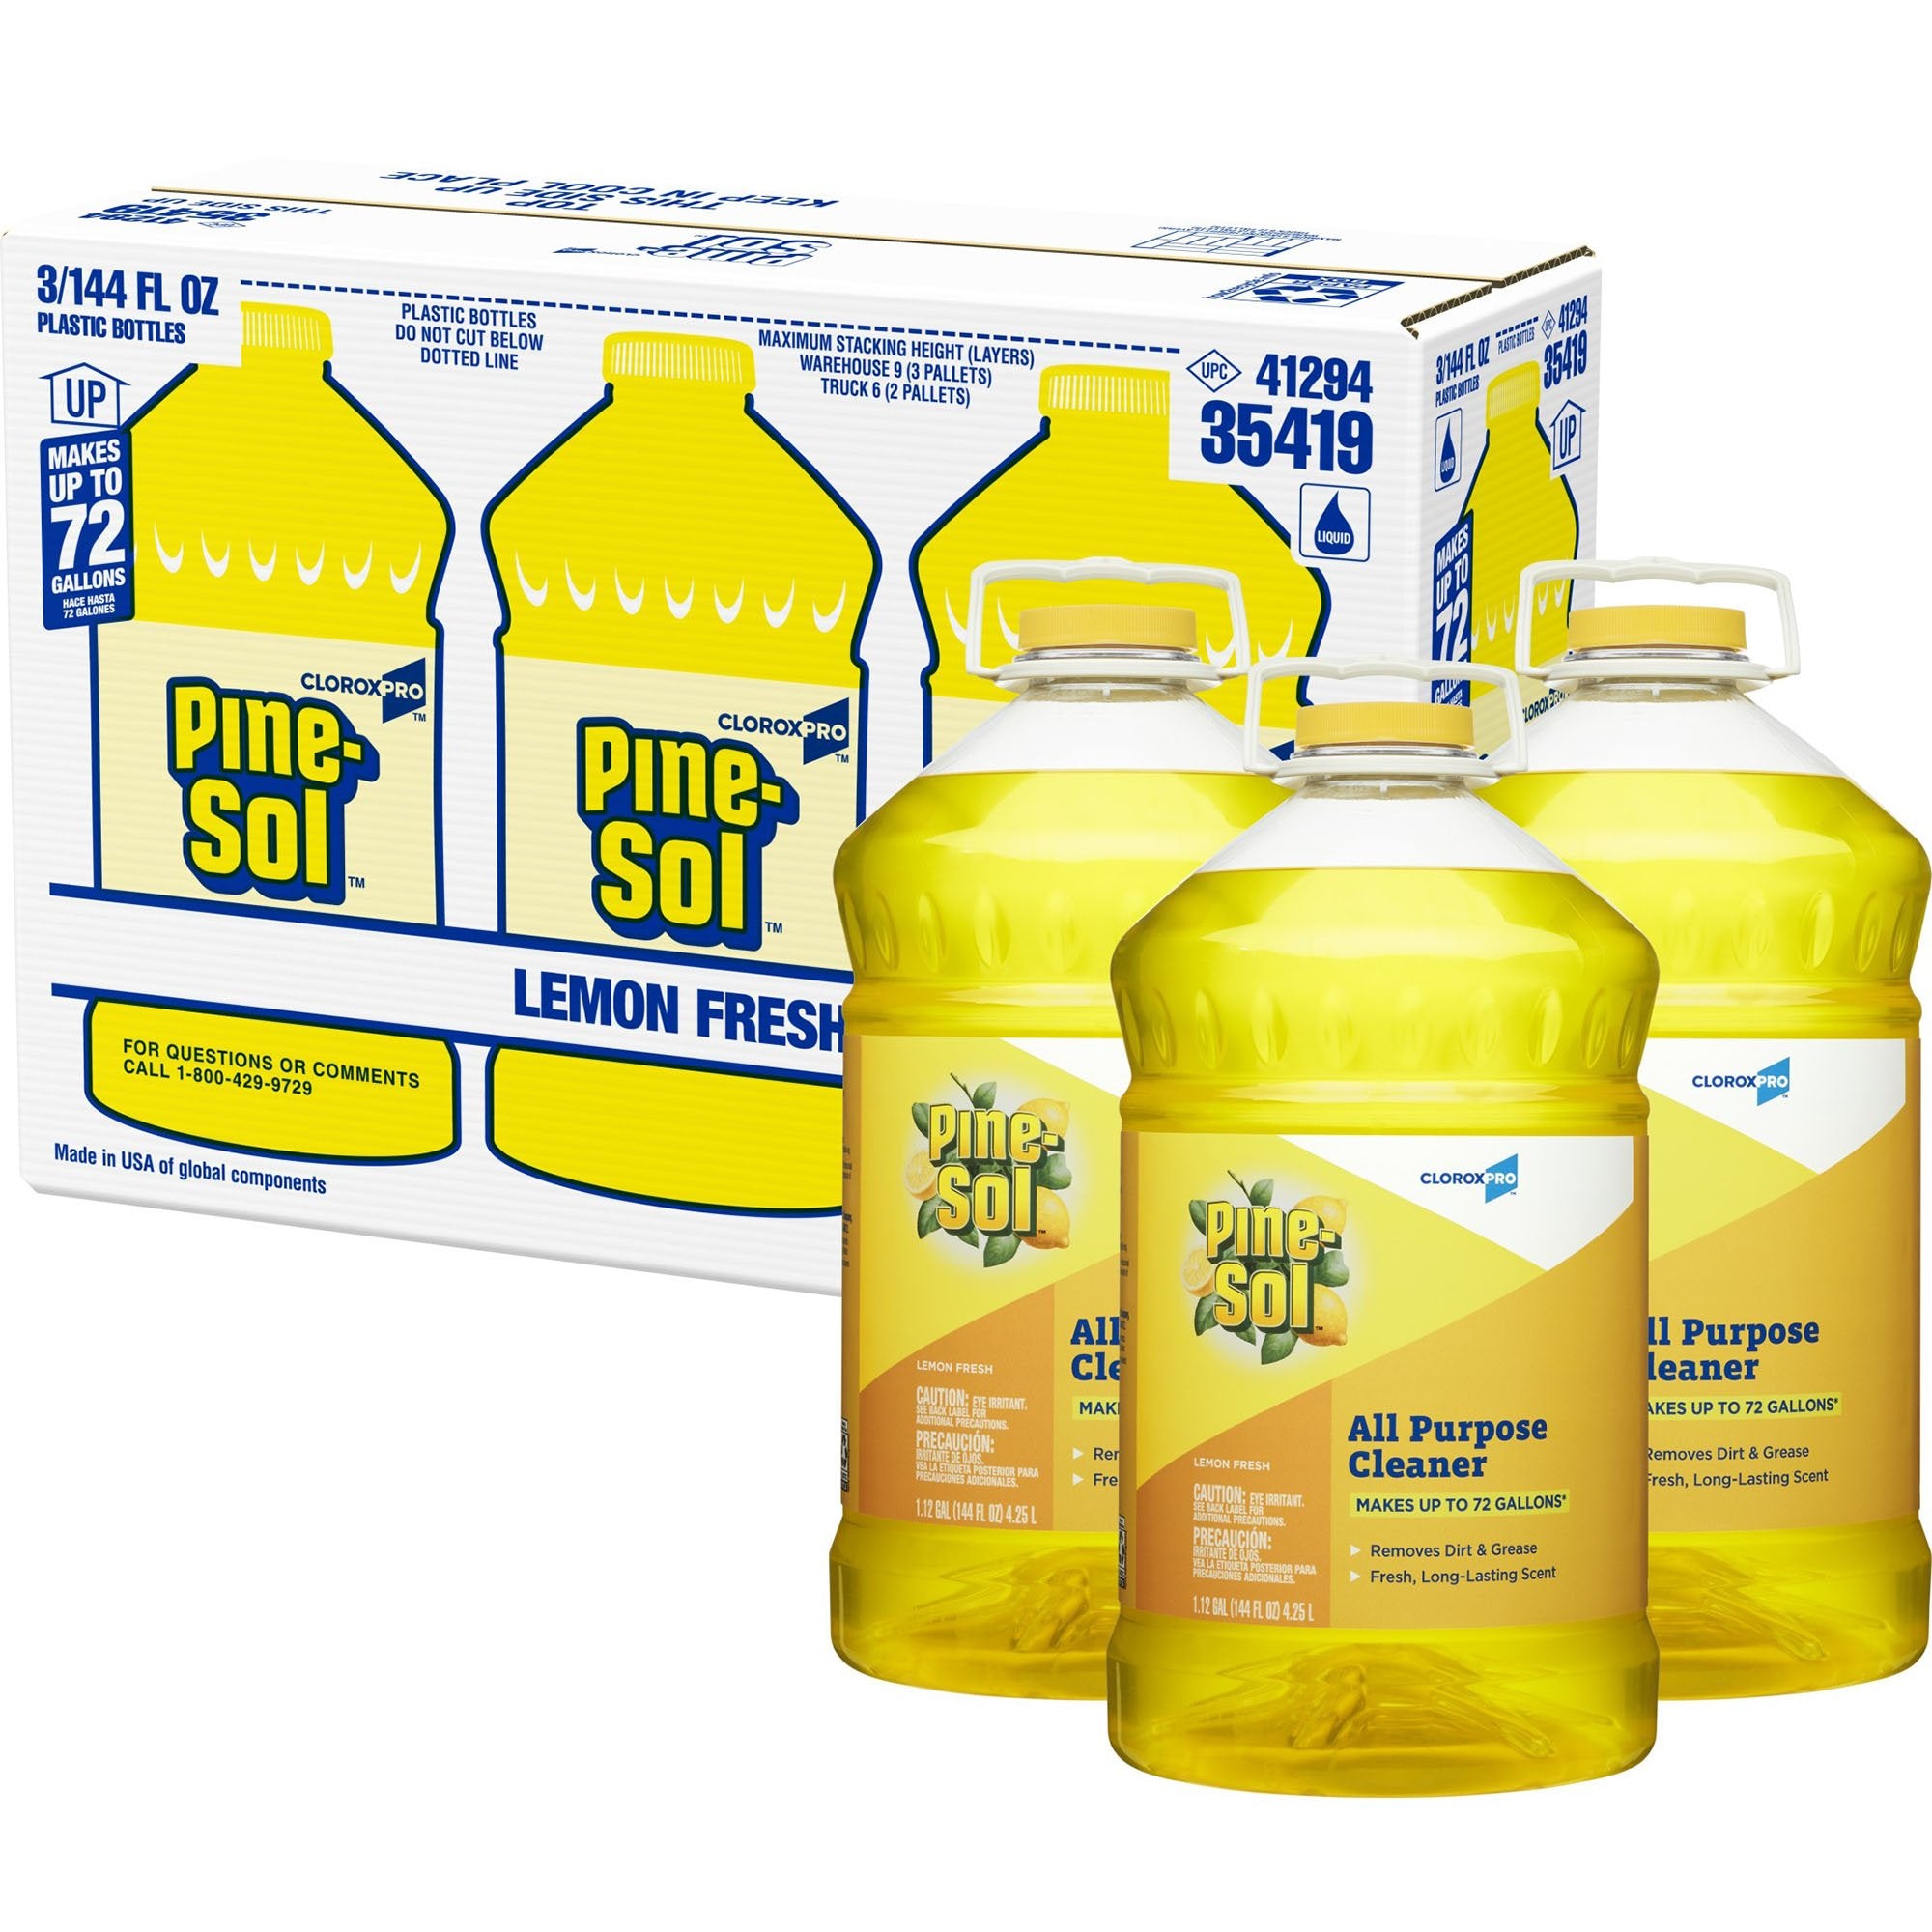 CloroxPro™ Pine-Sol® Surface Cleaner Oil Based Manual Pour Liquid Concentrate 144 oz. Jug Lemon Scent NonSterile